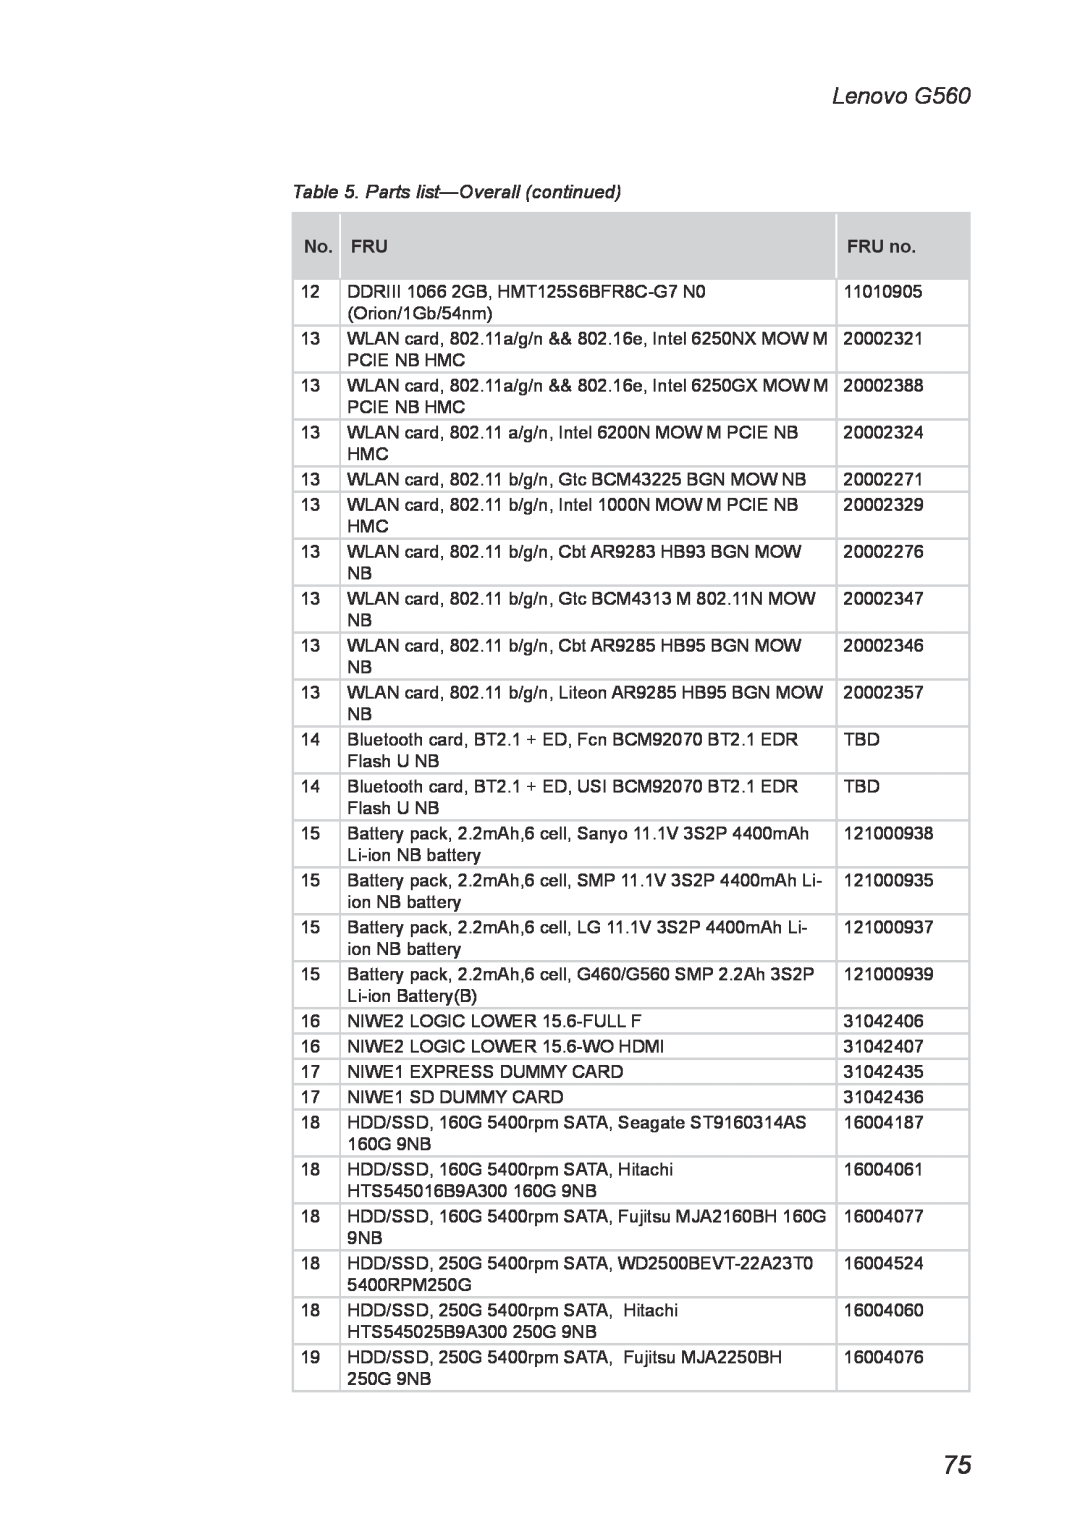 Lenovo manual Lenovo G560, Parts list-Overall continued 